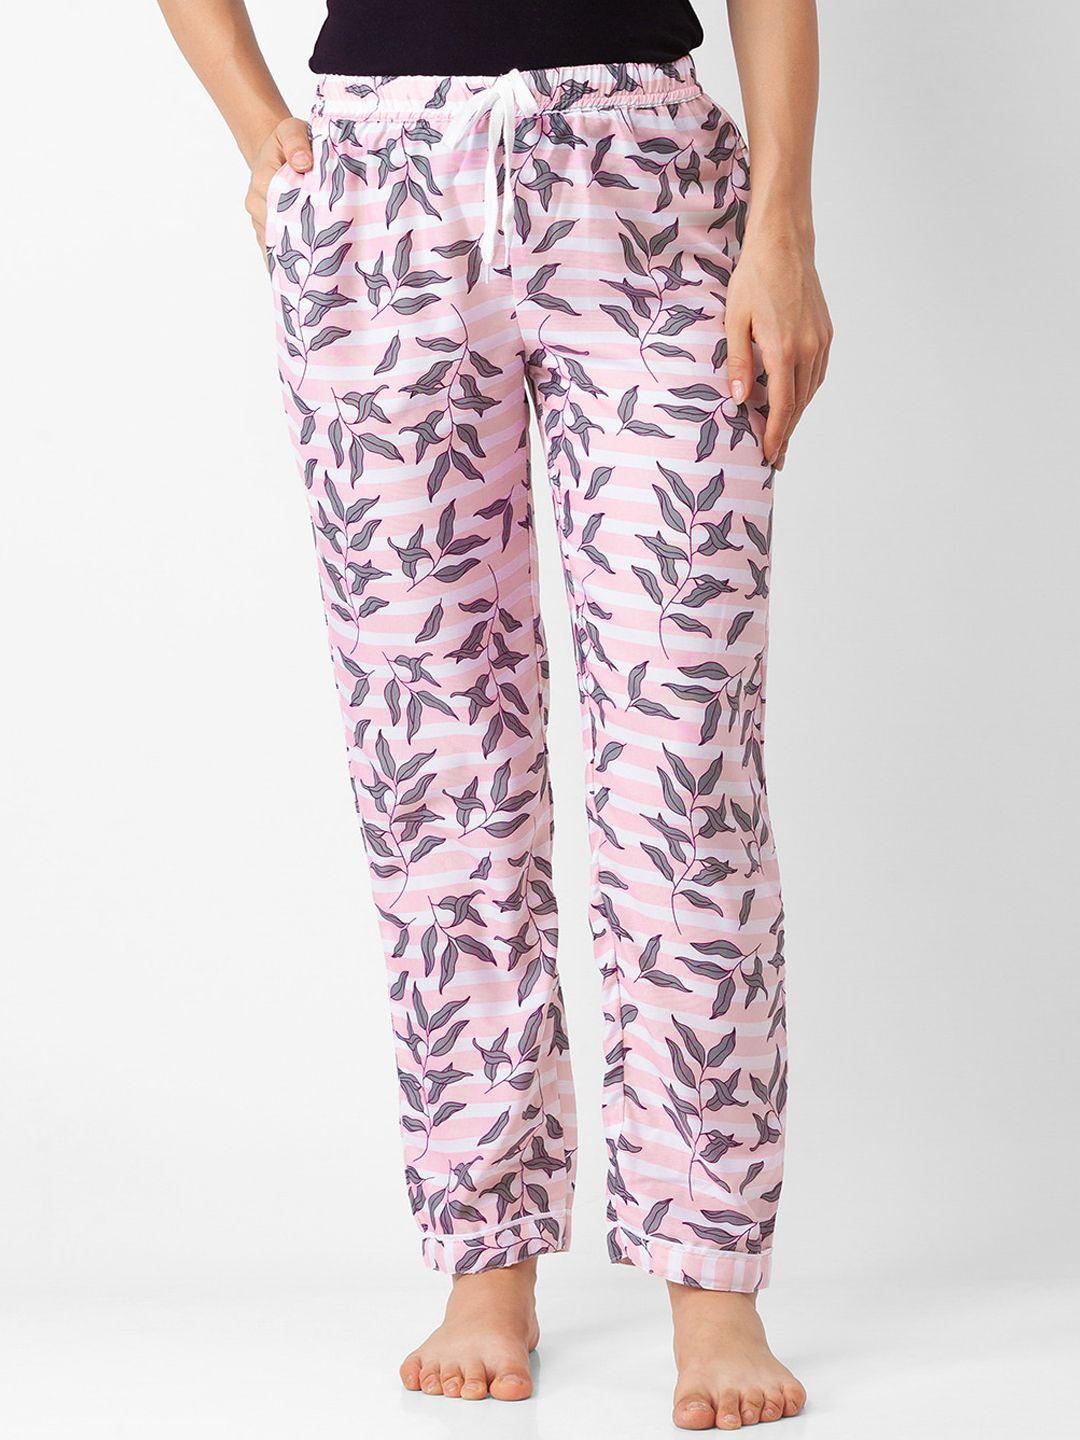 fashionrack-women-pink-printed-mid-rise-cotton-lounge-pant